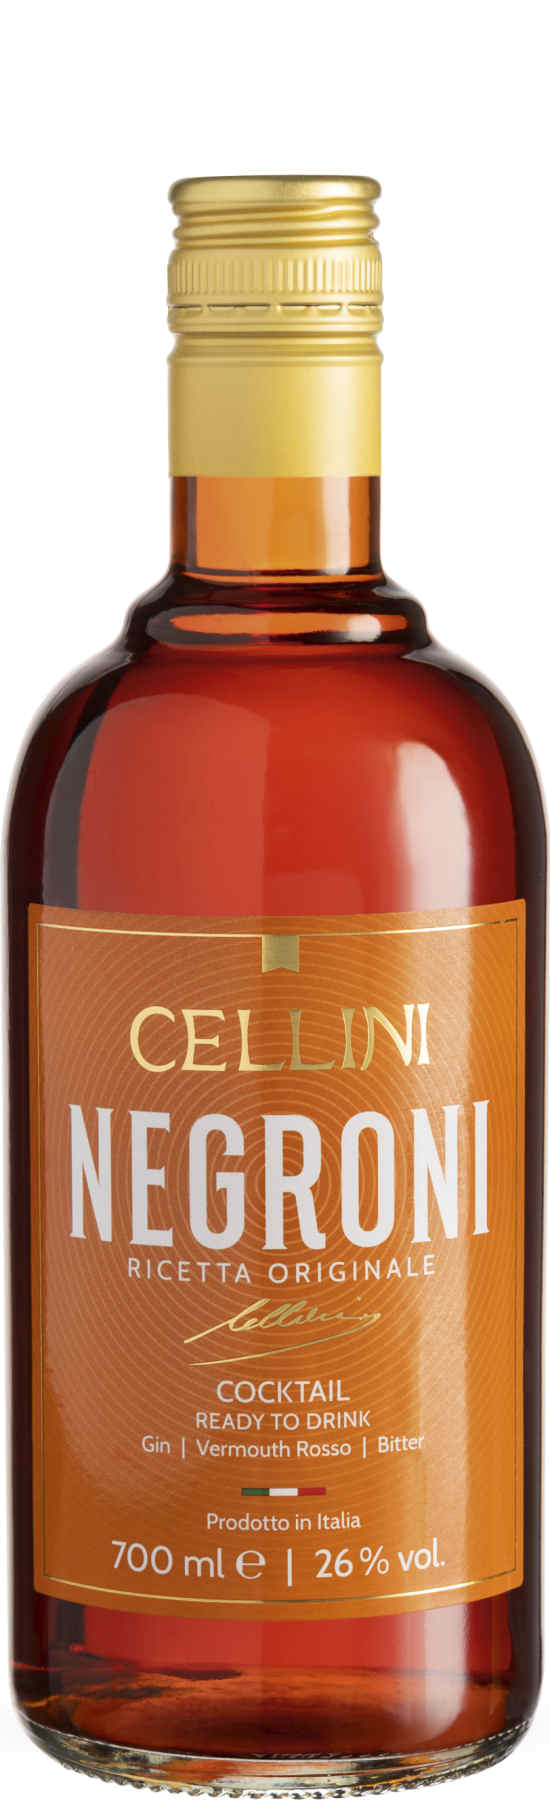 Cellini Negroni